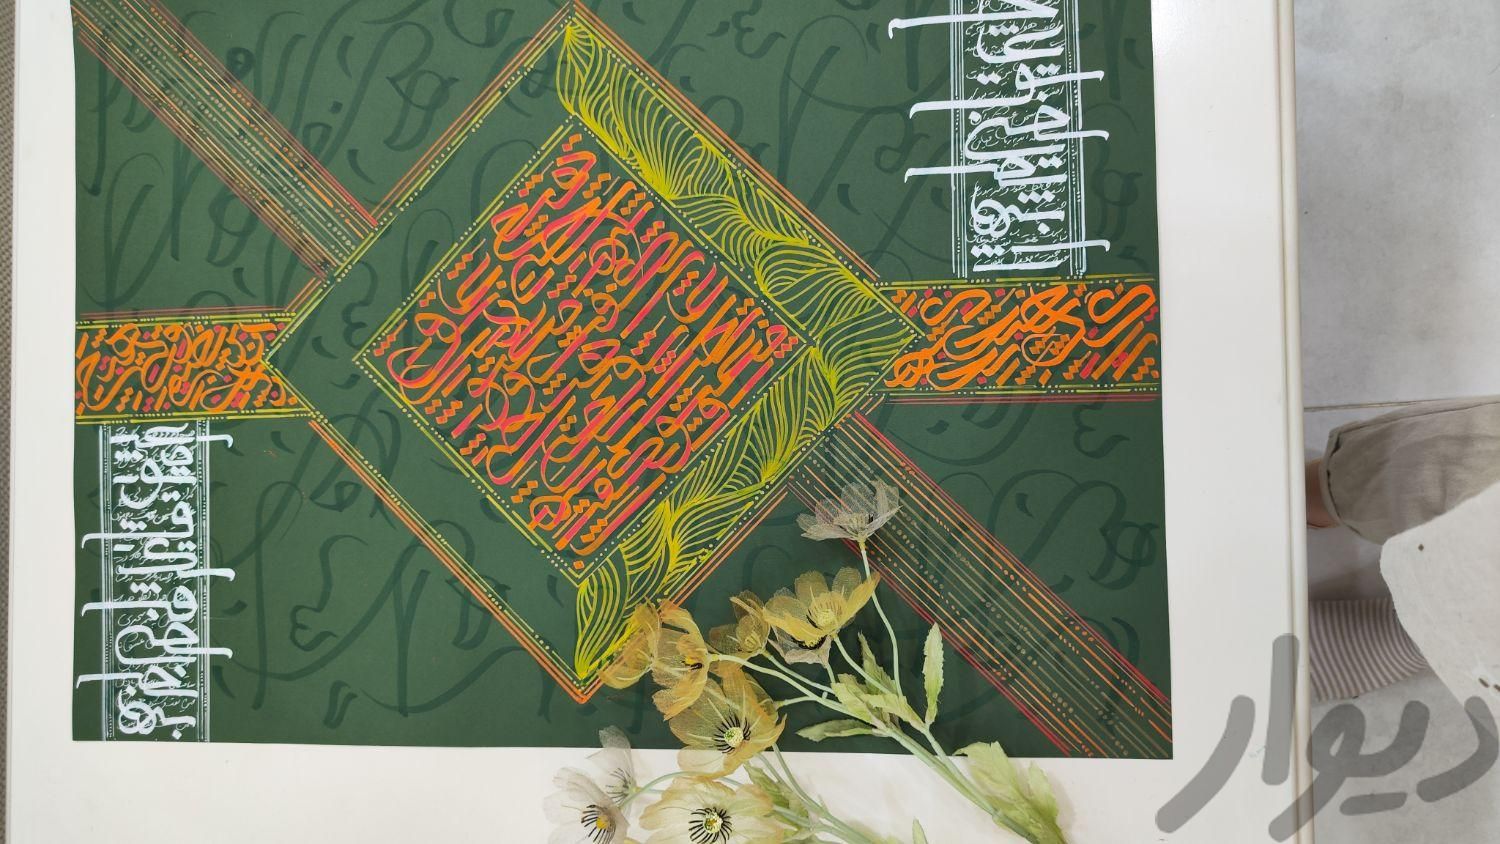 تابلو کالیگرافی تایپوگرافی خوشنویسی|تابلو، نقاشی و عکس|تهران, پونک|دیوار